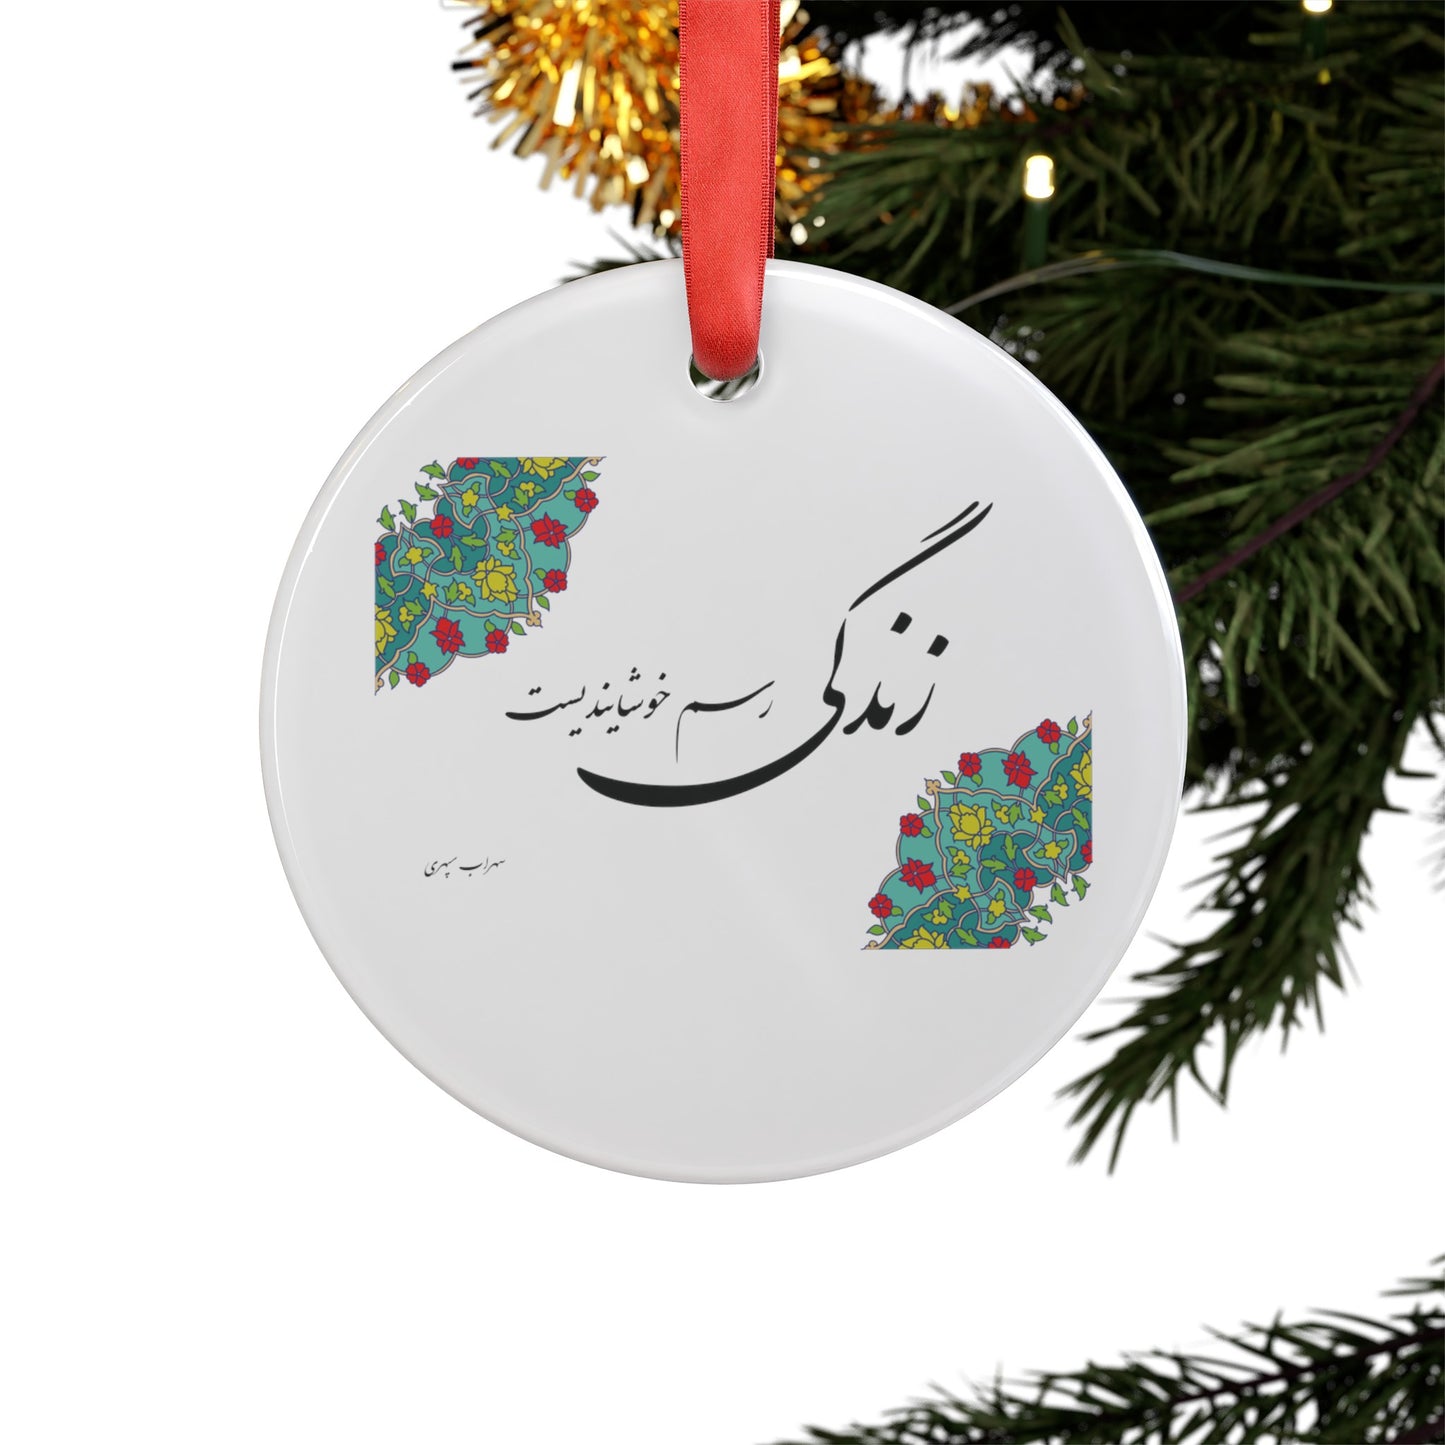 Acrylic Ornament with Ribbon, with Tazheeb and poetry: آویز تزئینی با روبان، با تذهیب و شعر